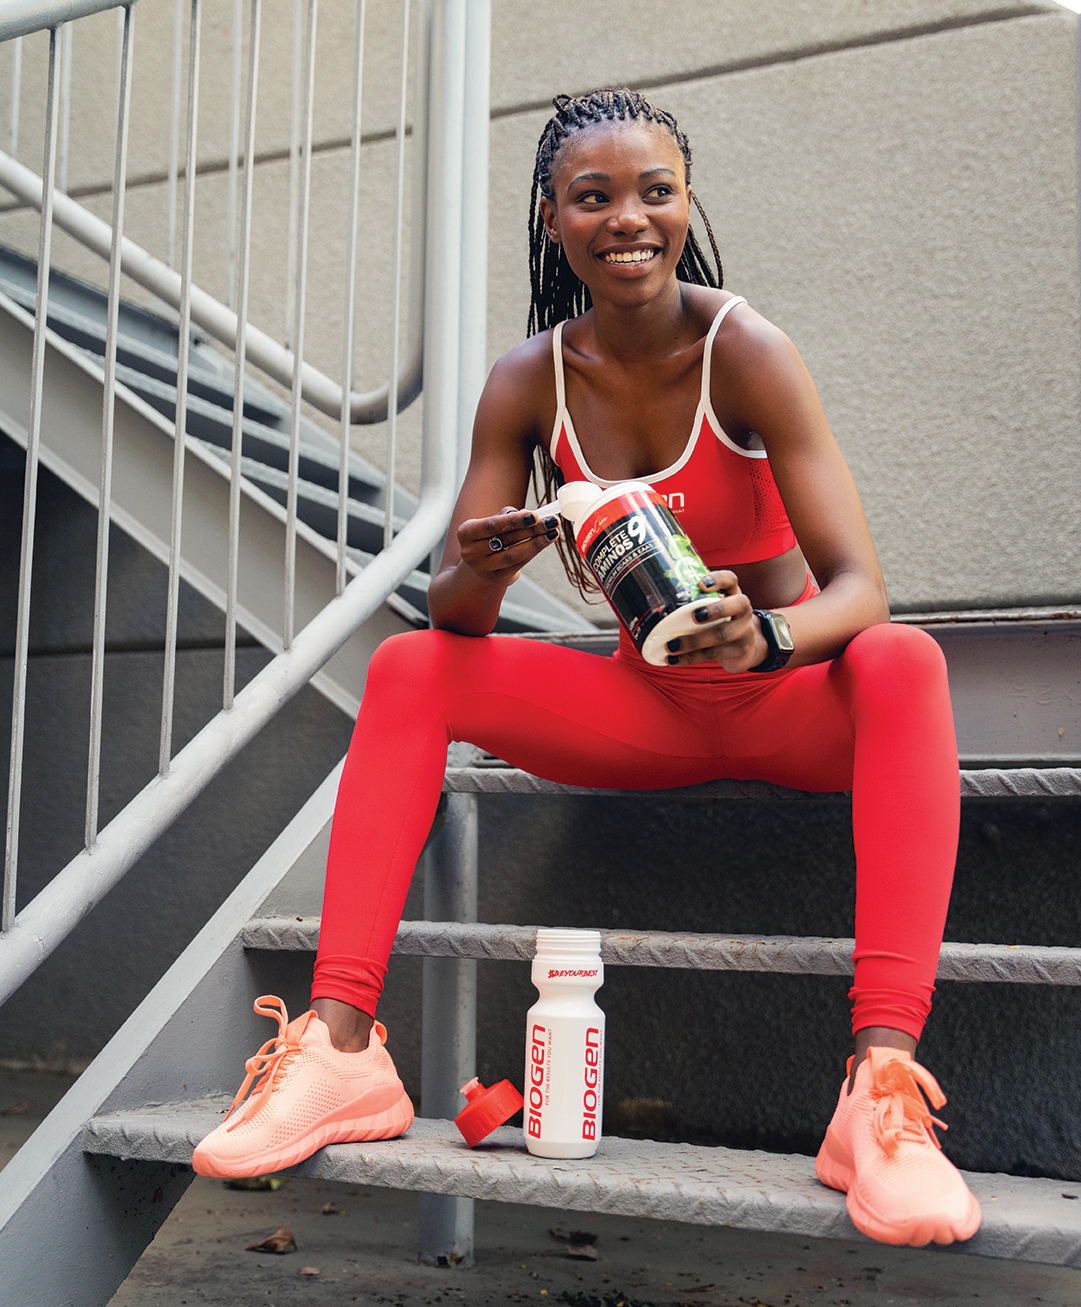 usi fitnessmagazine3 | Biogen SA | Meet the new Biogen Face of Fitness, Usi Nteyi